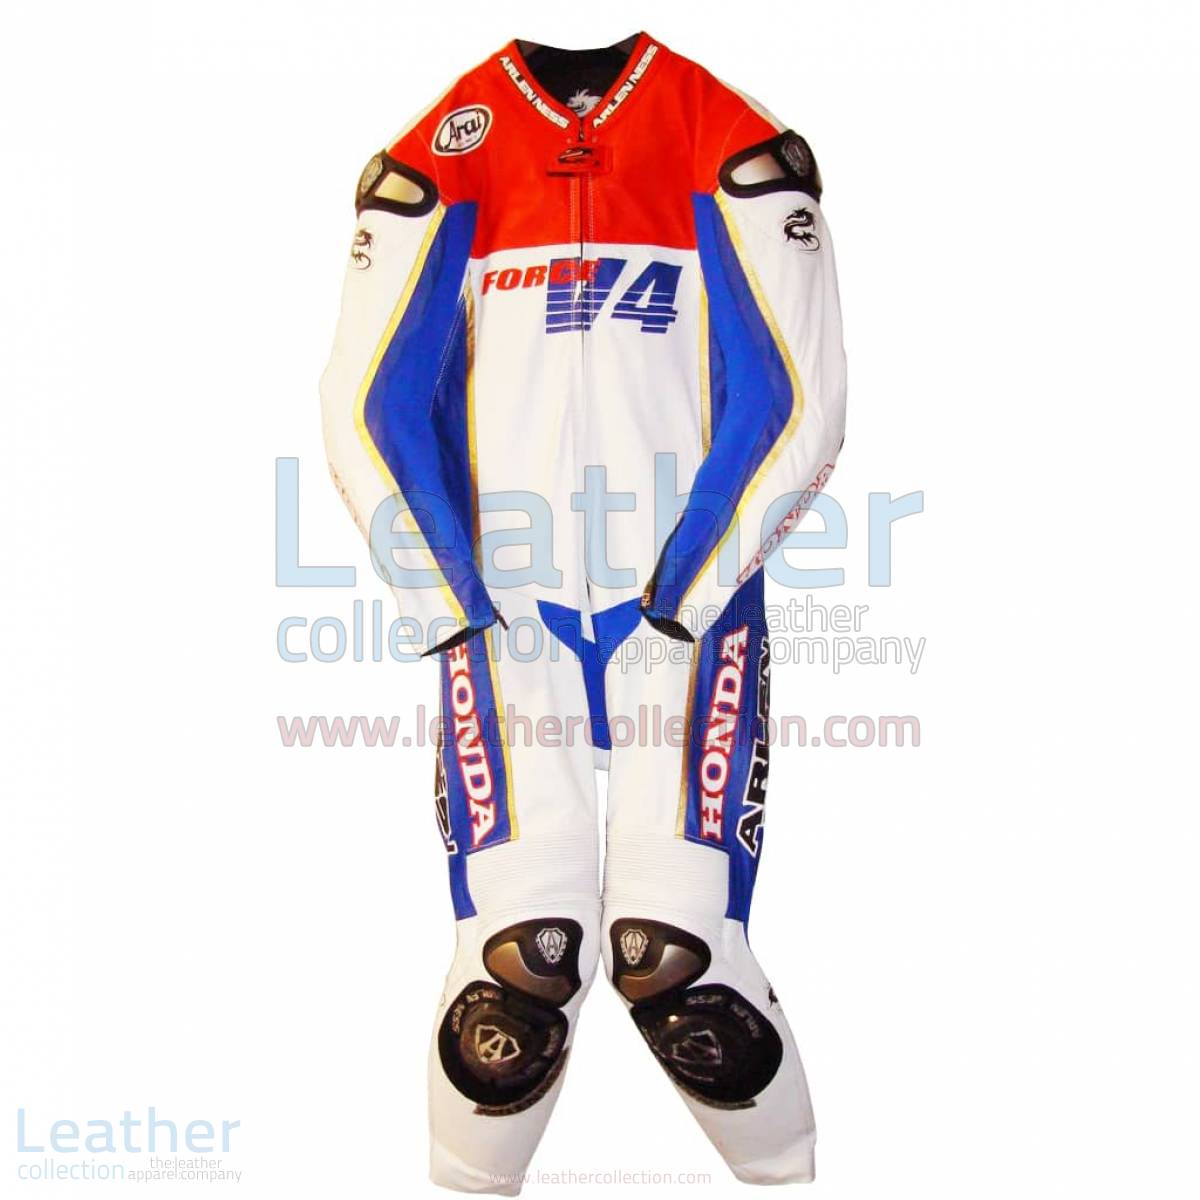 Roger Burnett Honda Goodwood Racing Suit – Honda Suit